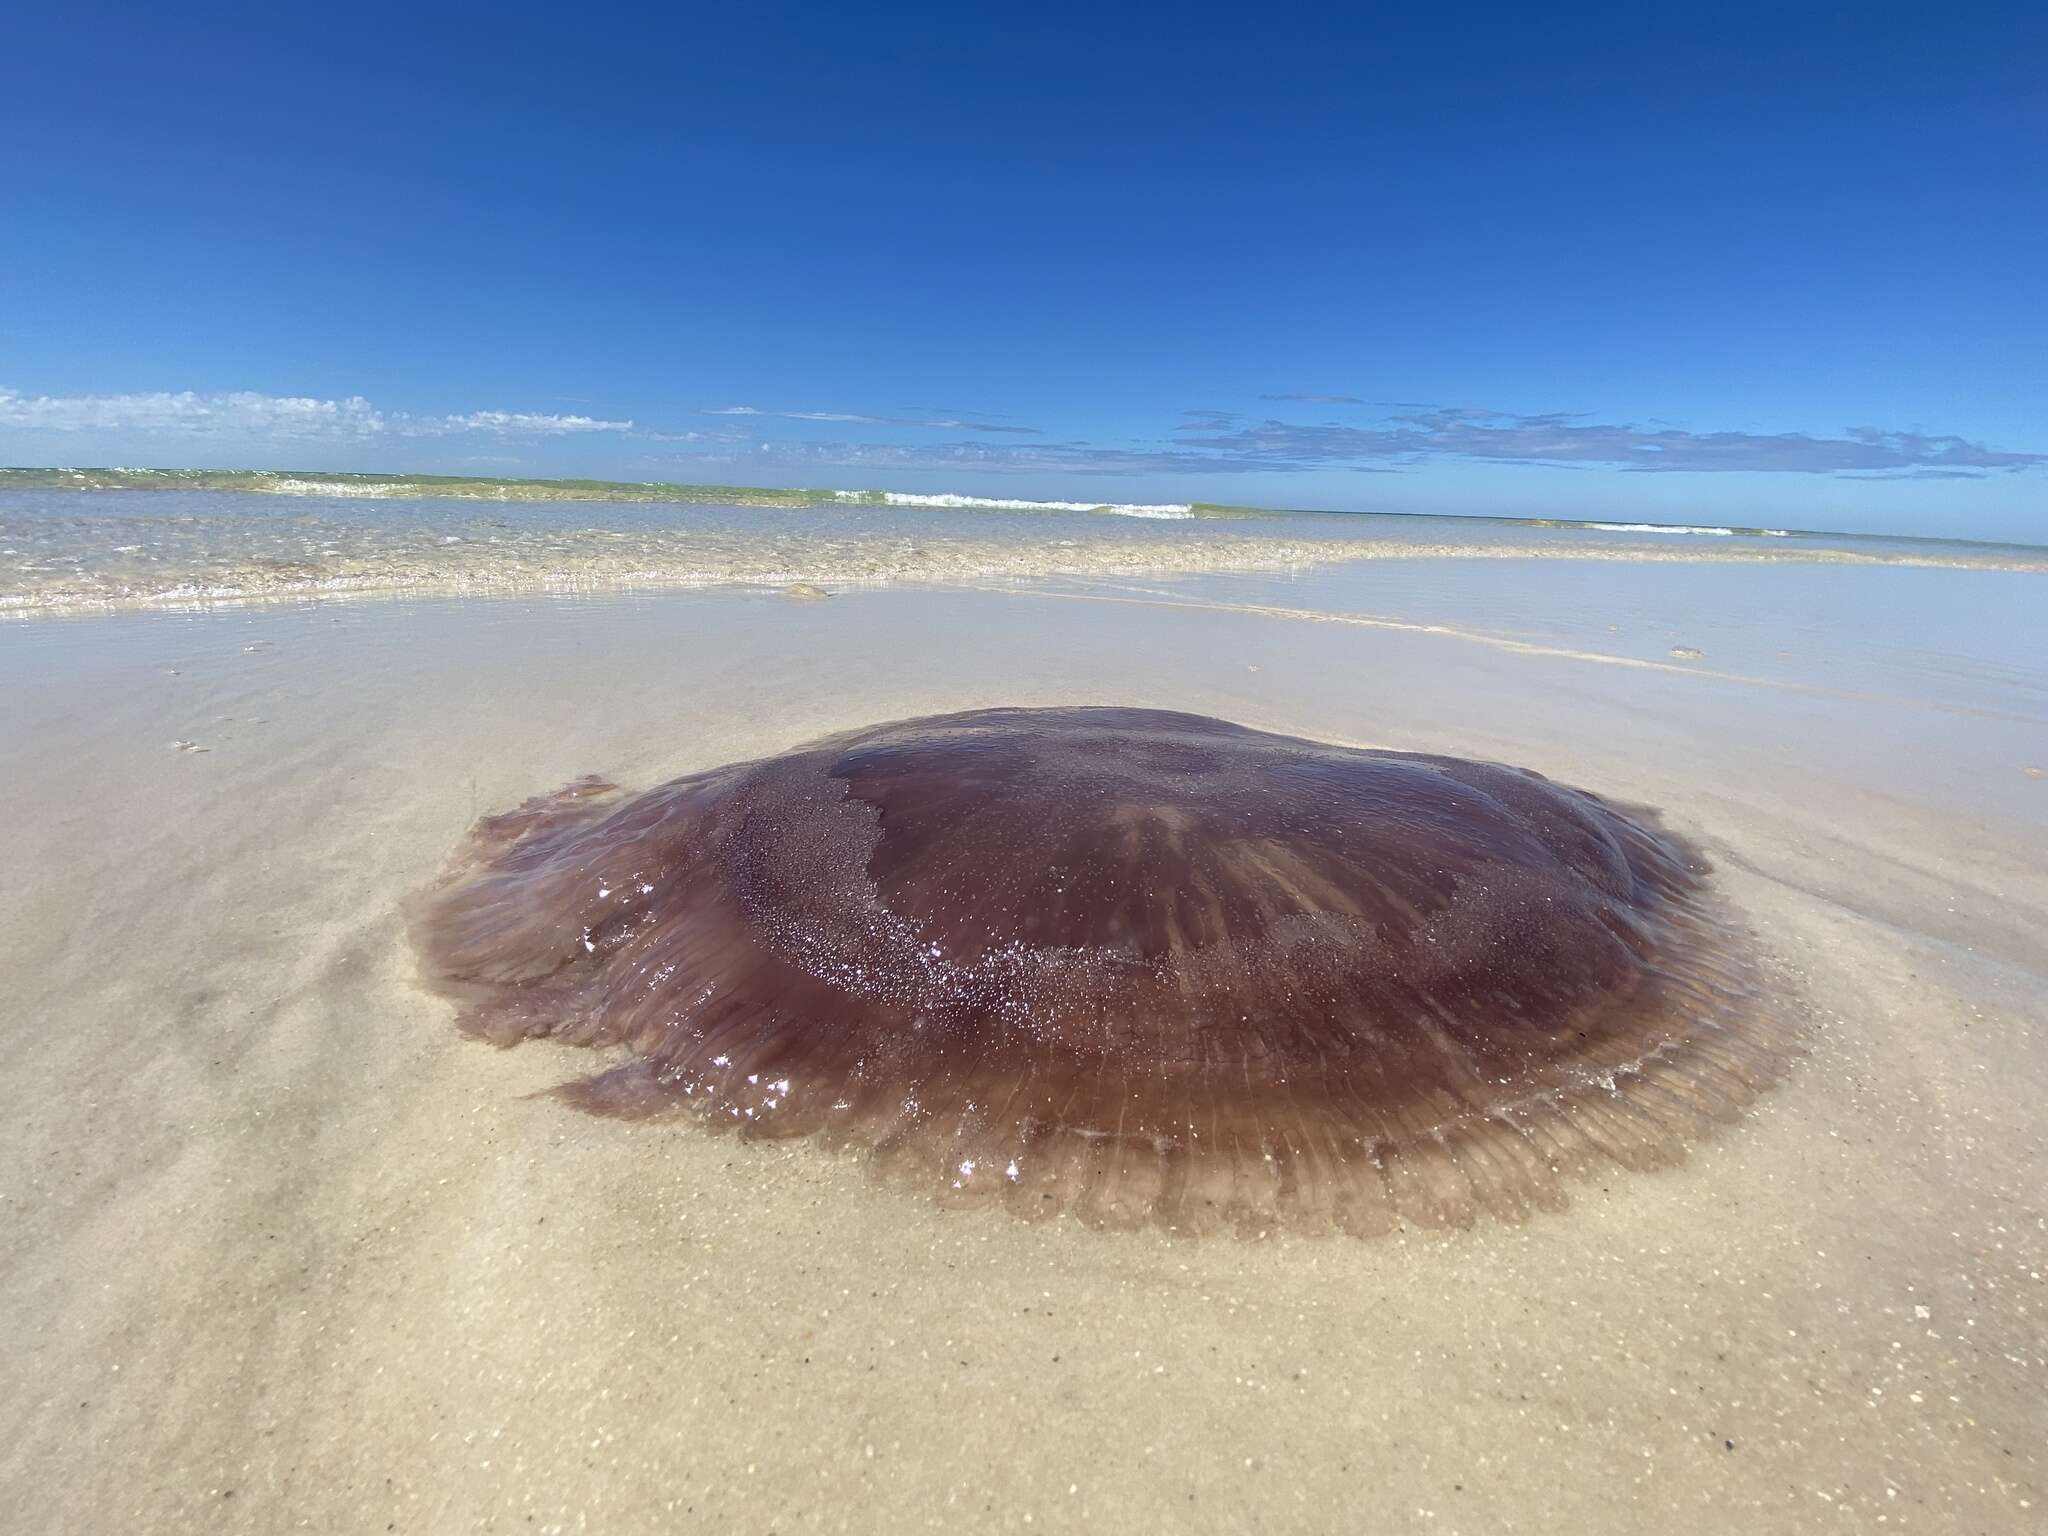 Image of larson's jellyfish